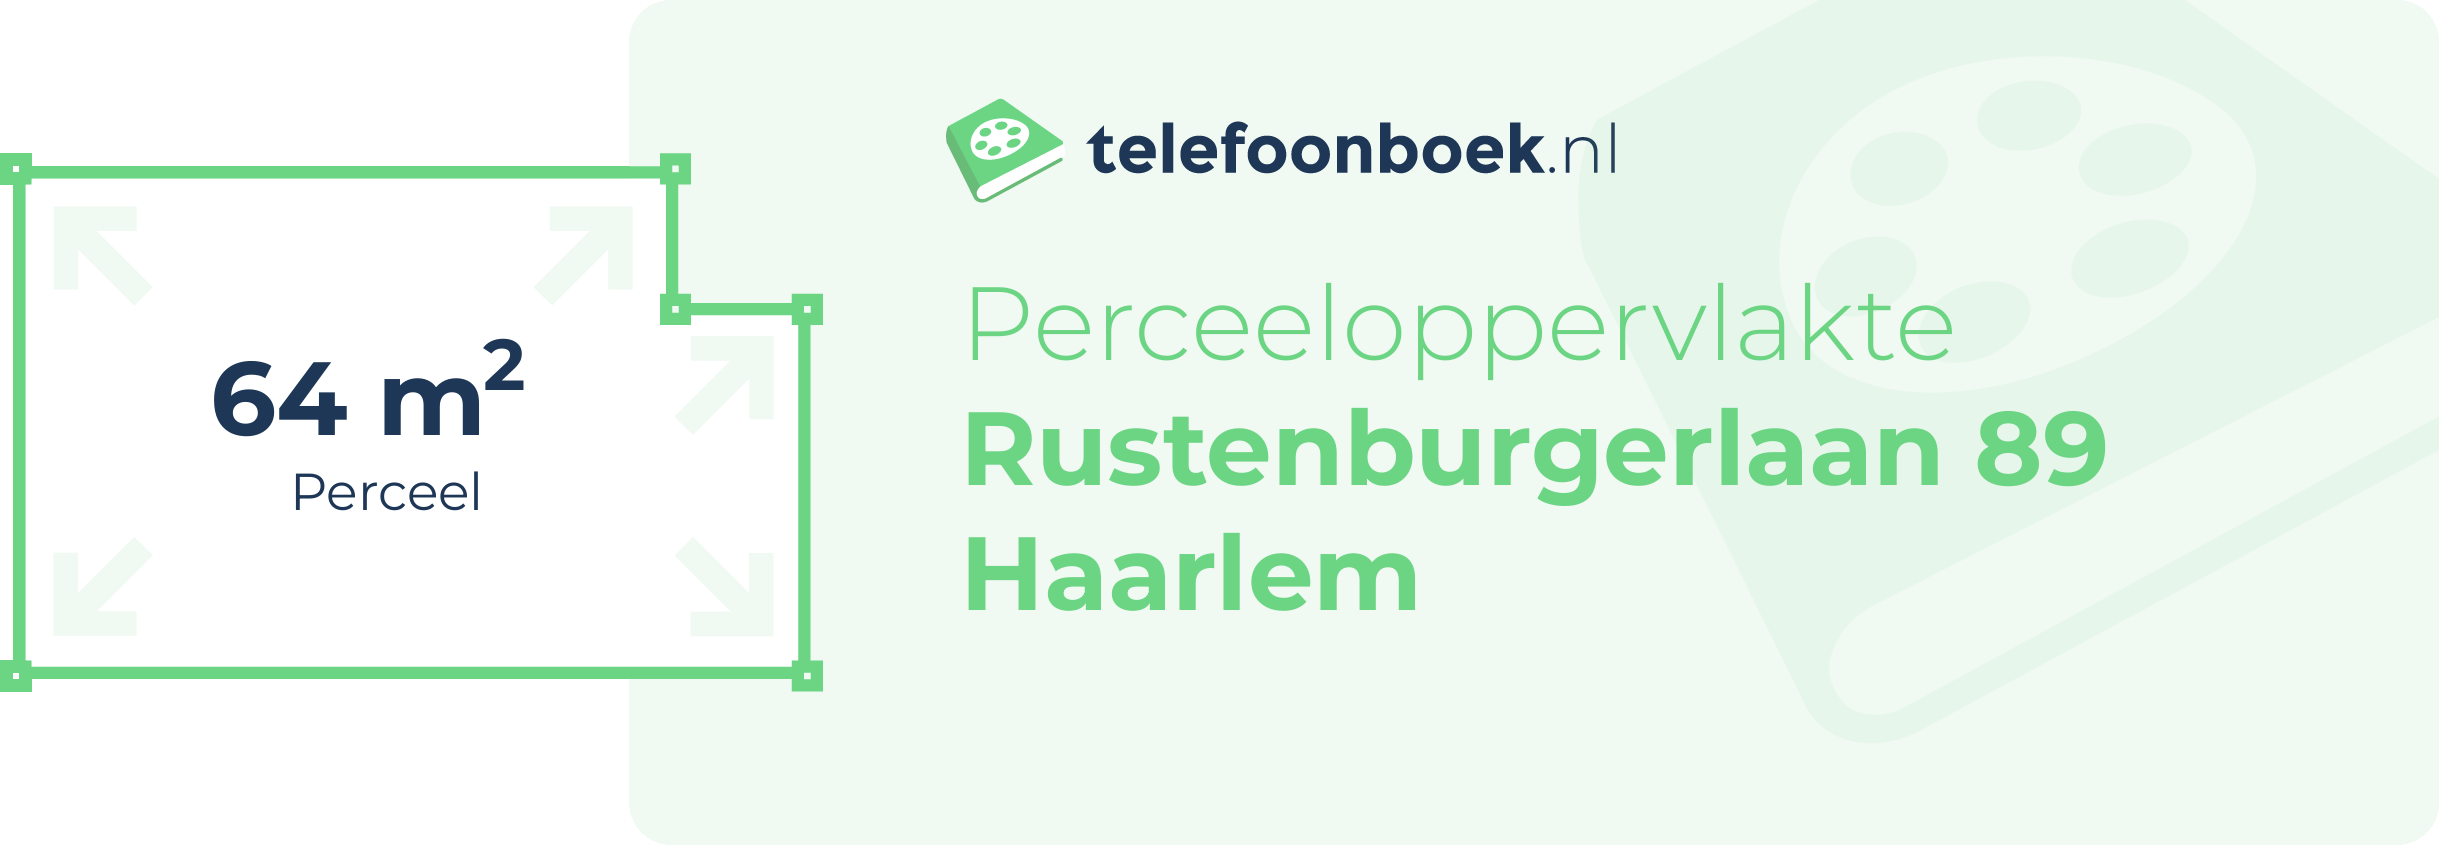 Perceeloppervlakte Rustenburgerlaan 89 Haarlem